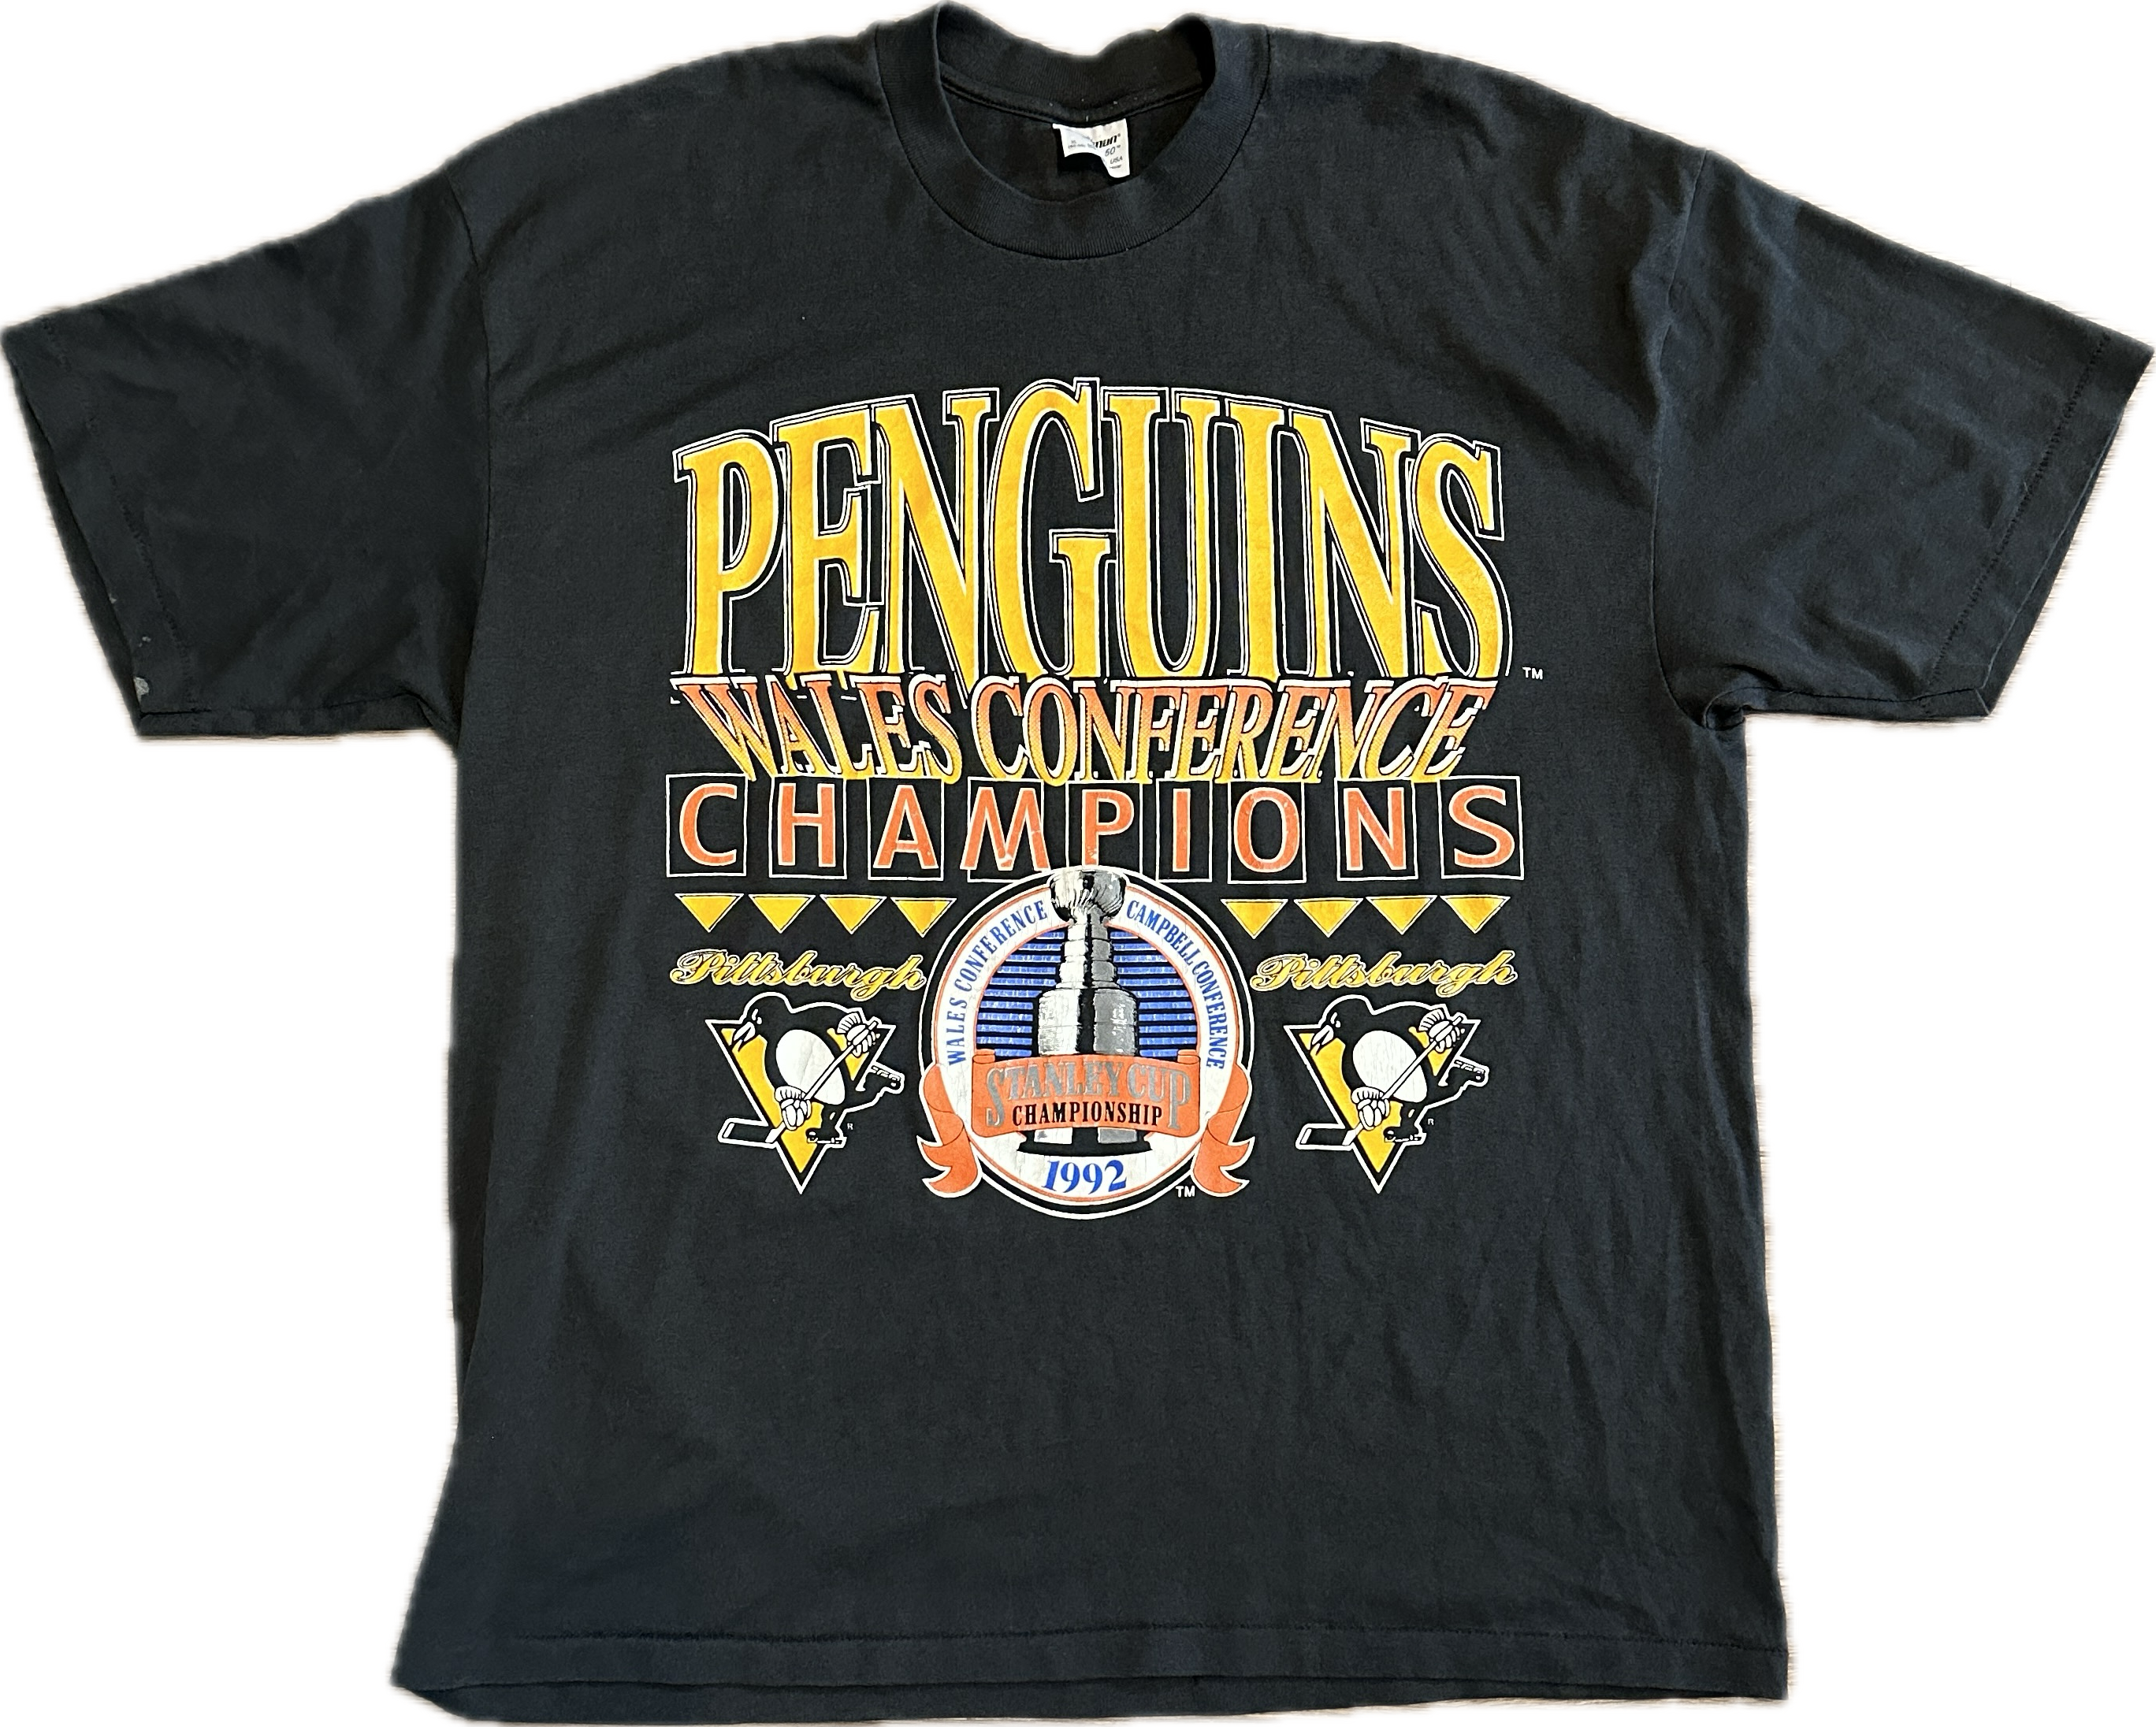 Vintage Pittsburgh Penguins NHL Hockey T-Shirt (XL)